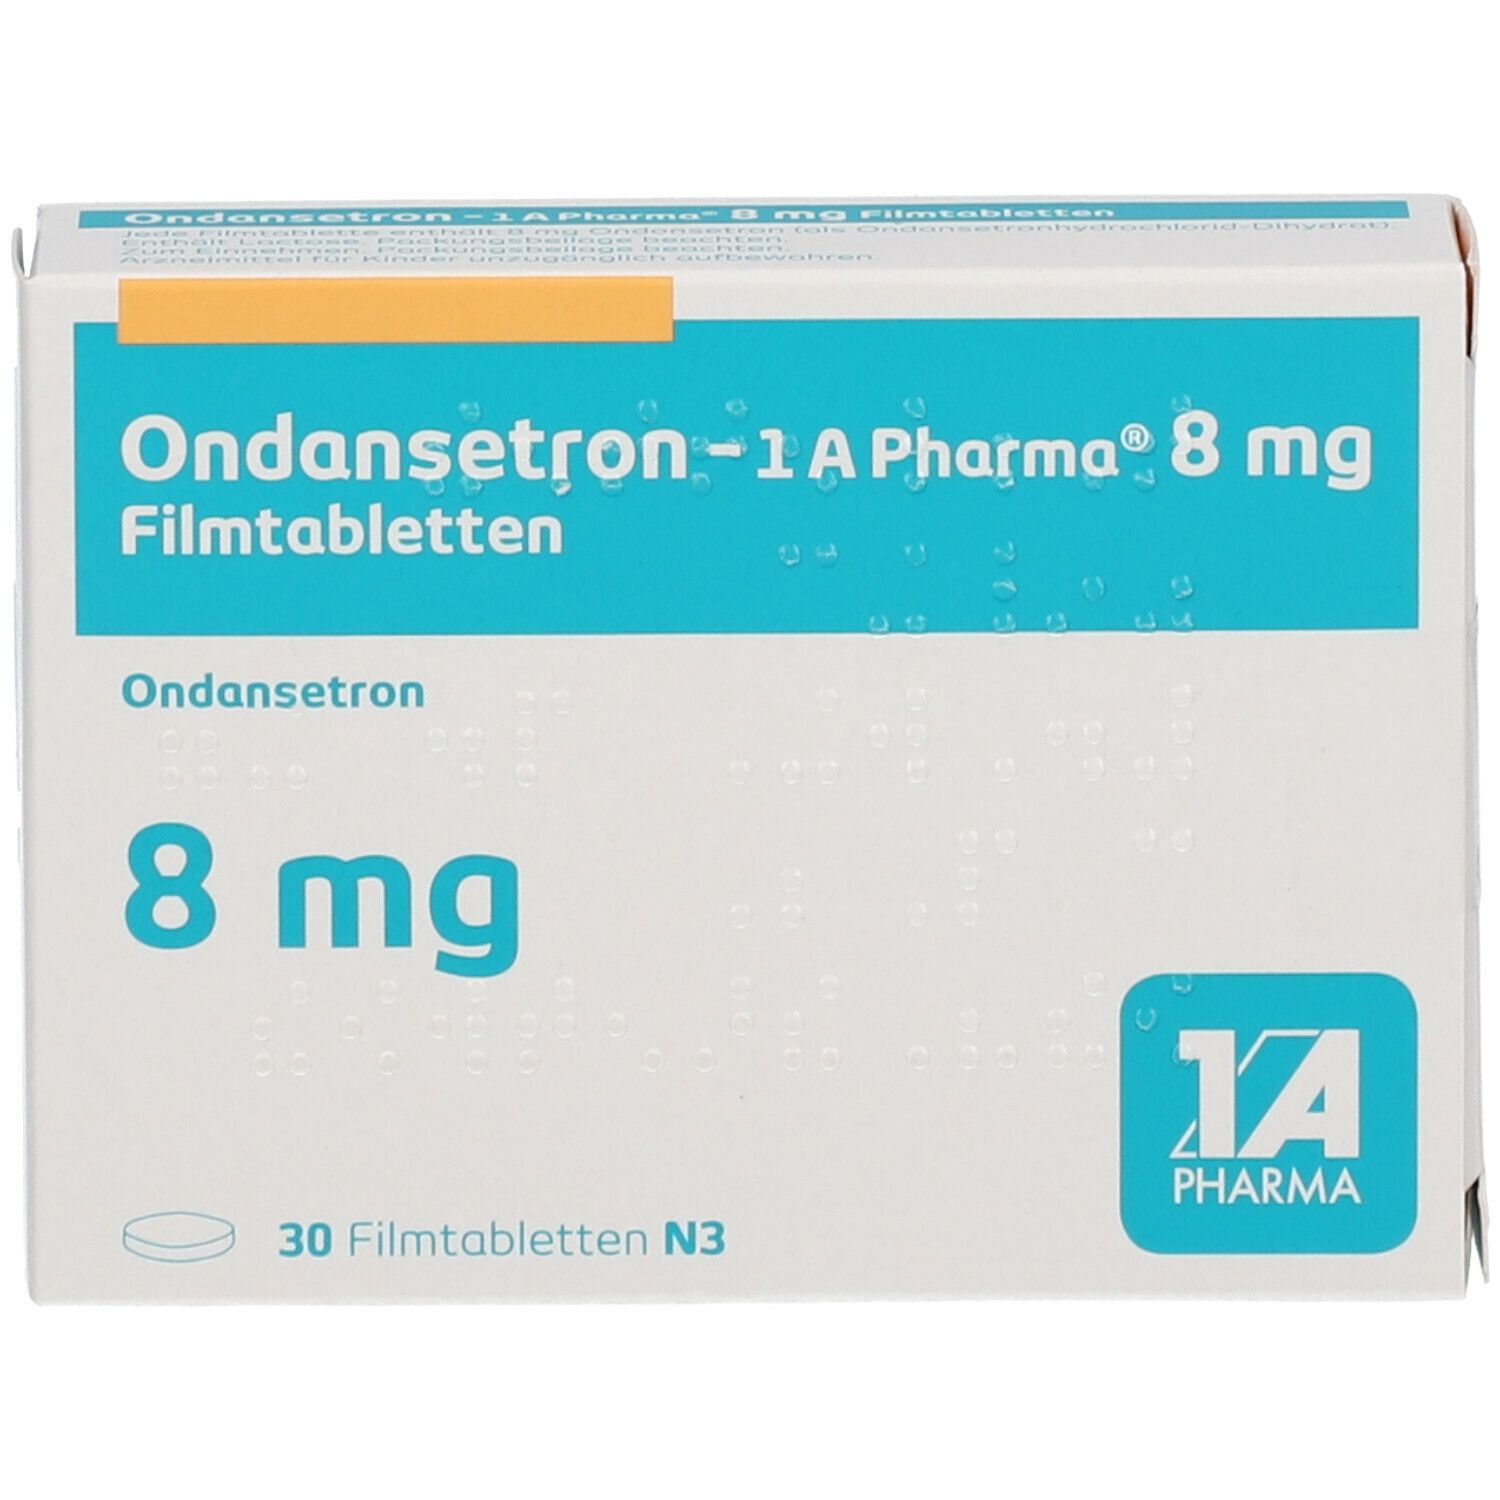 Ondansetron - 1 A Pharma® 8 mg